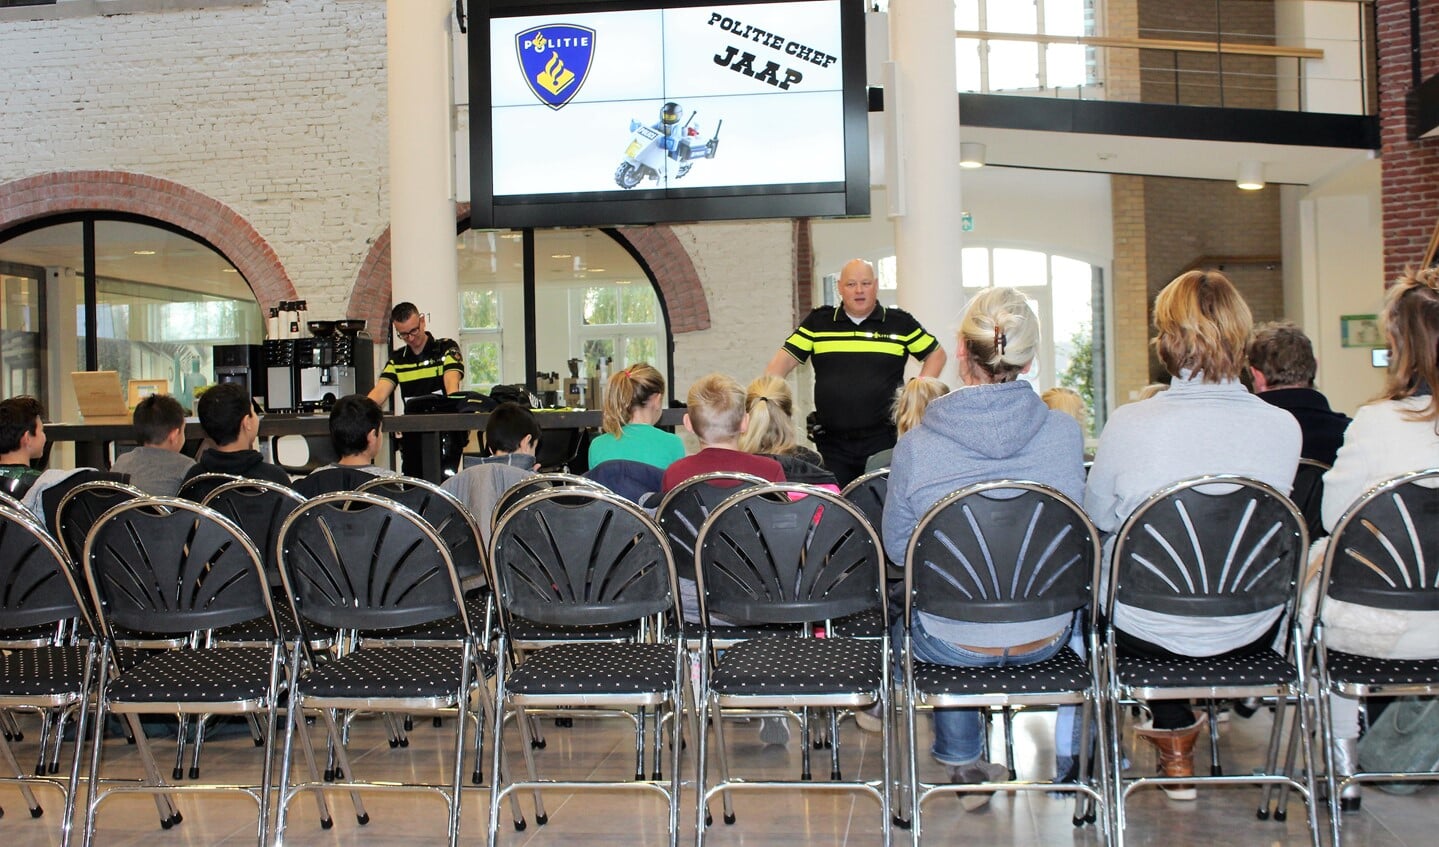 Politieteamchef Jaap de Kok spreekt de Politiekids en ouders toe (foto: Dick Janssen).